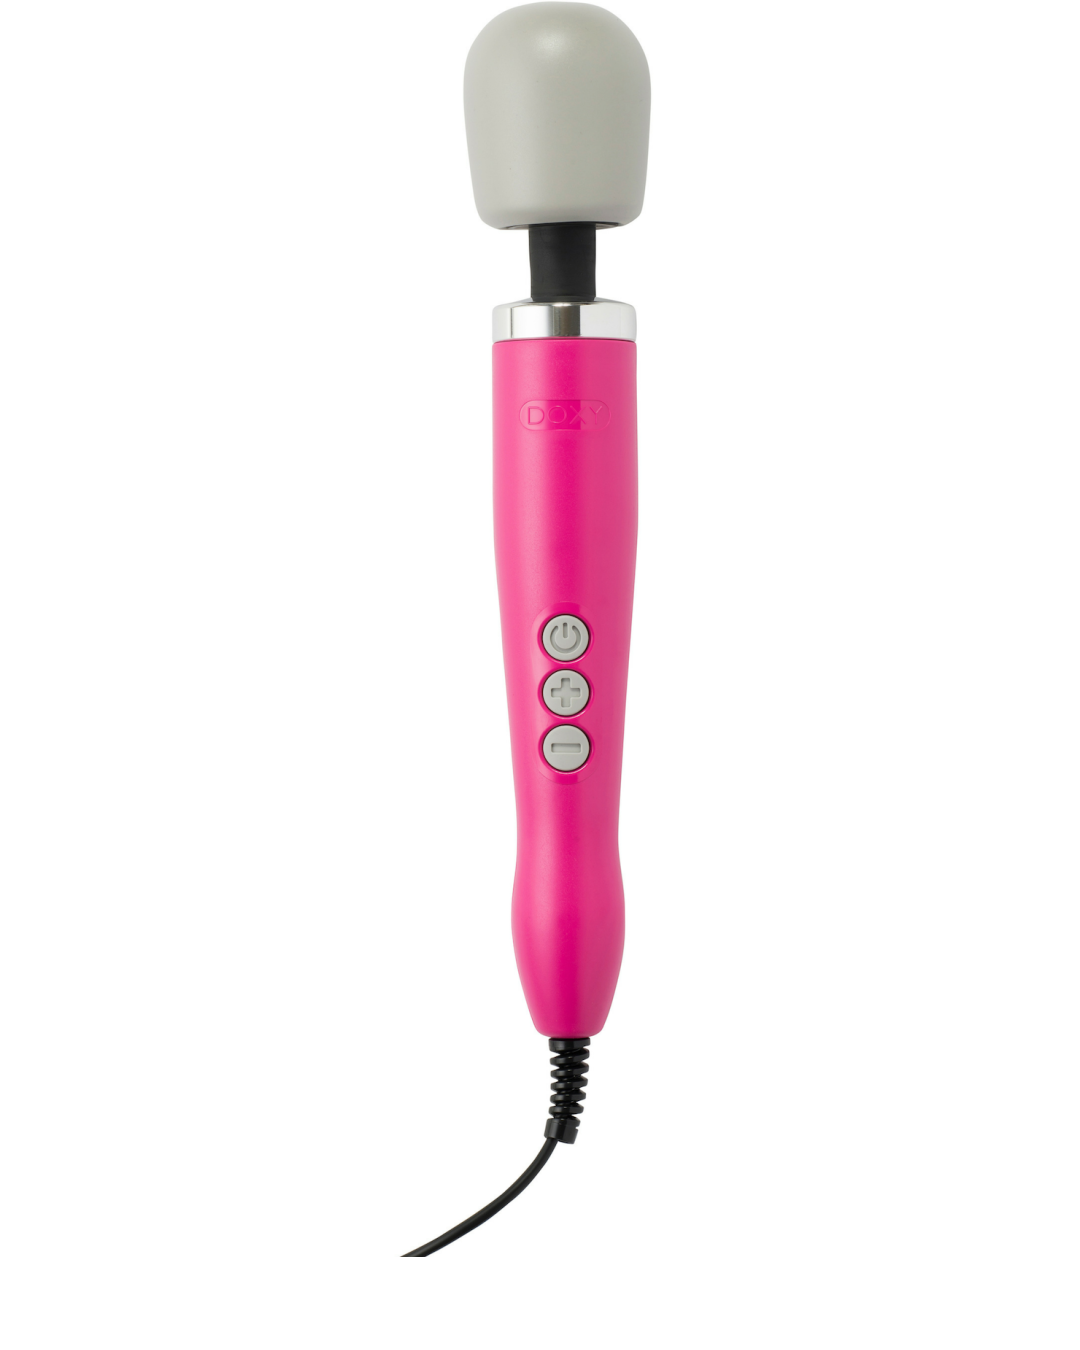 pink doxy massager wand upright showing cord 